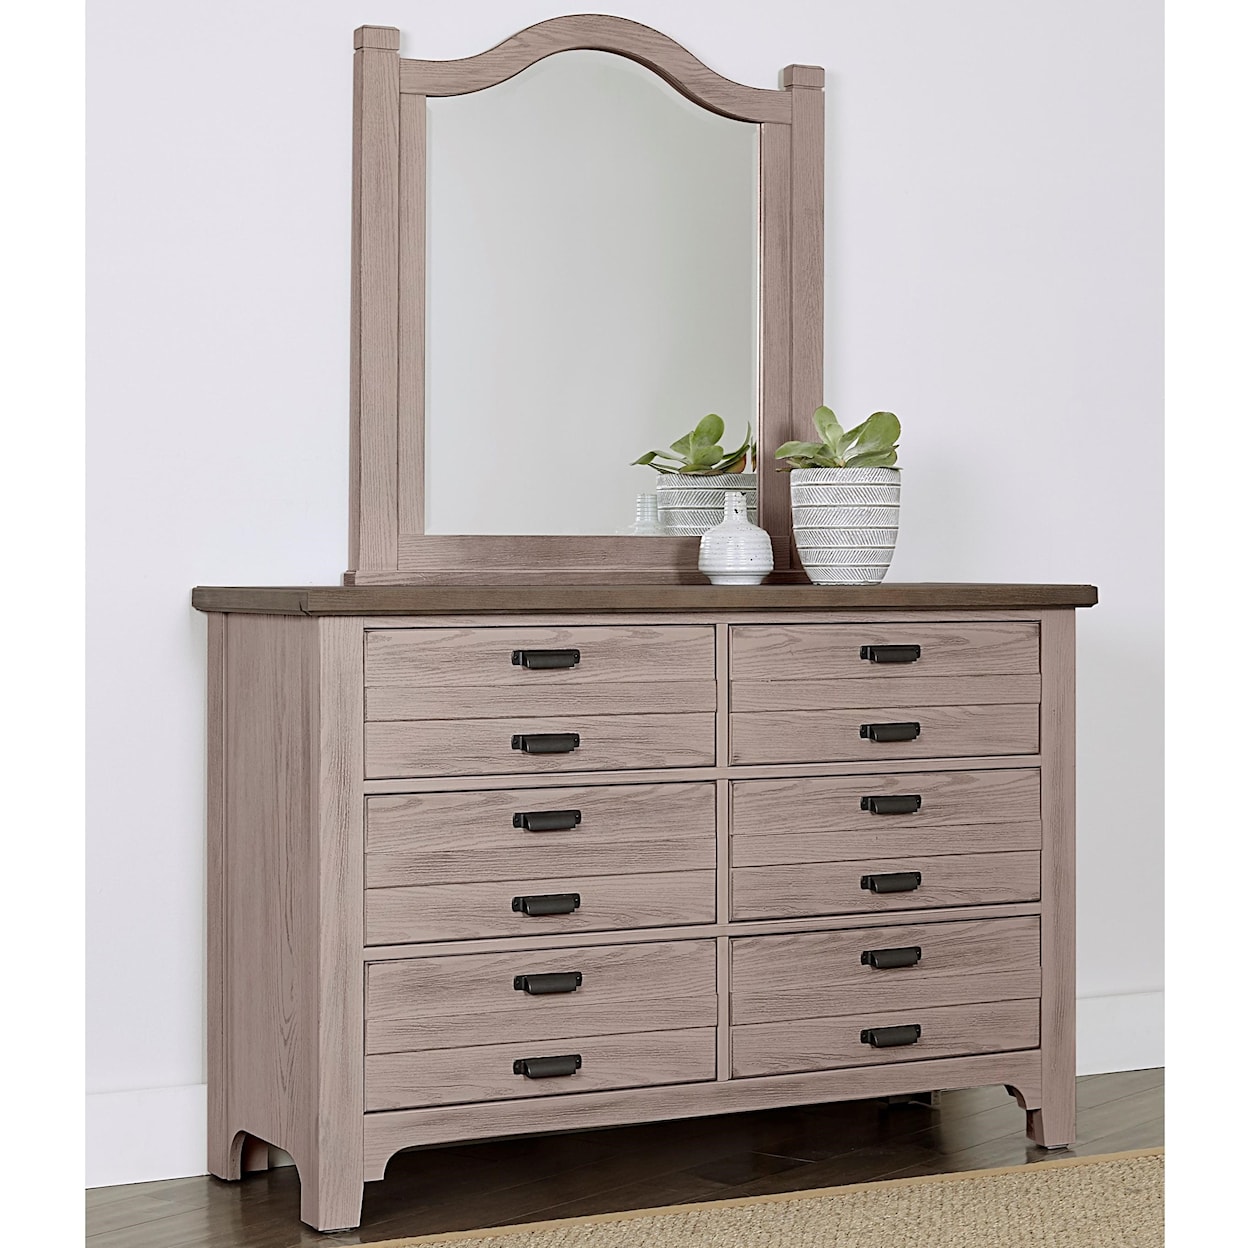 Laurel Mercantile Co. Bungalow Double Dresser and Arch Mirror